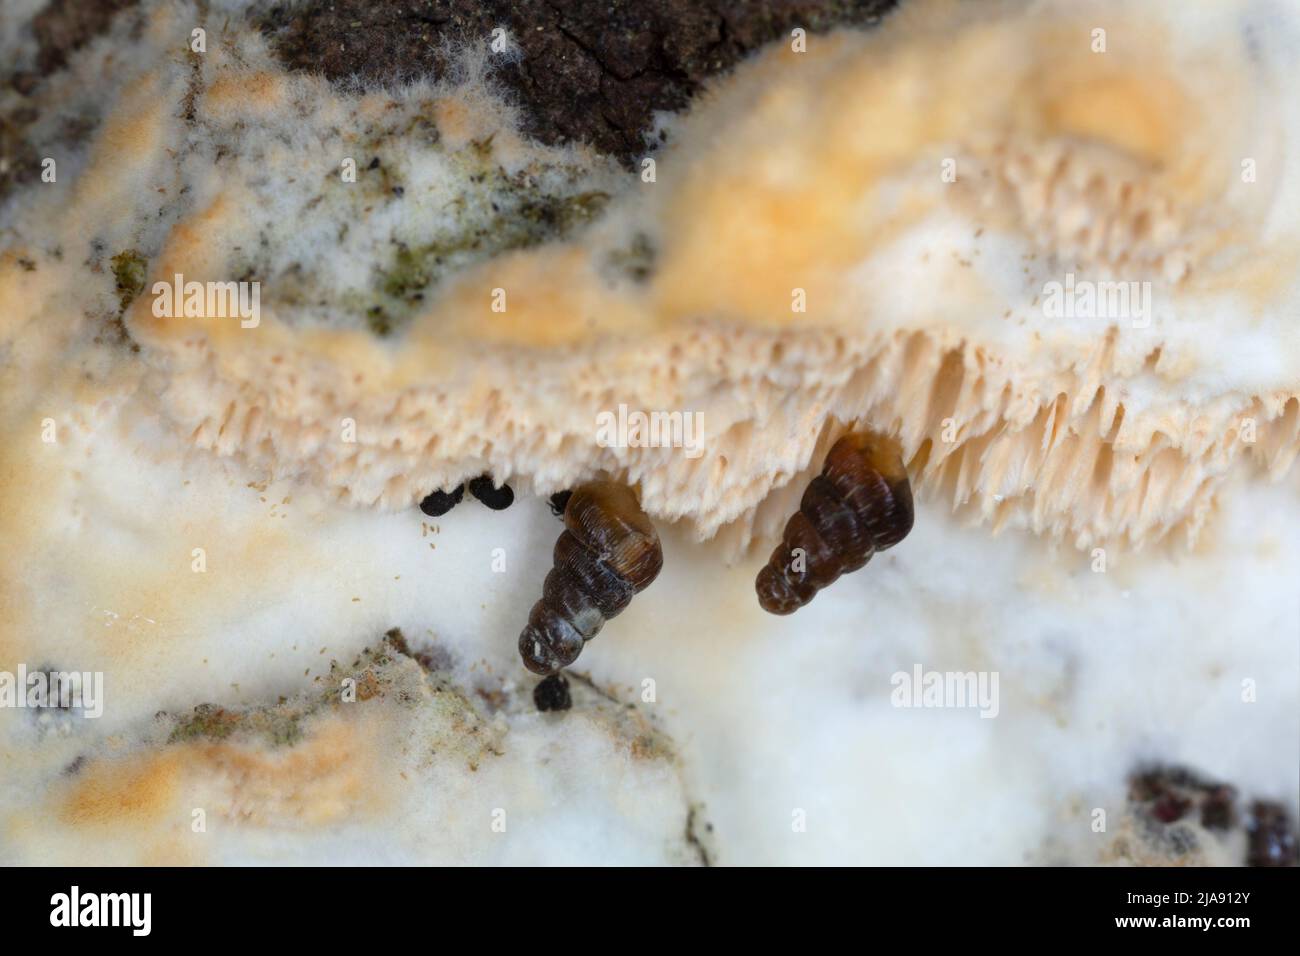 Doors snails, Clausiliidae on fungi Stock Photo